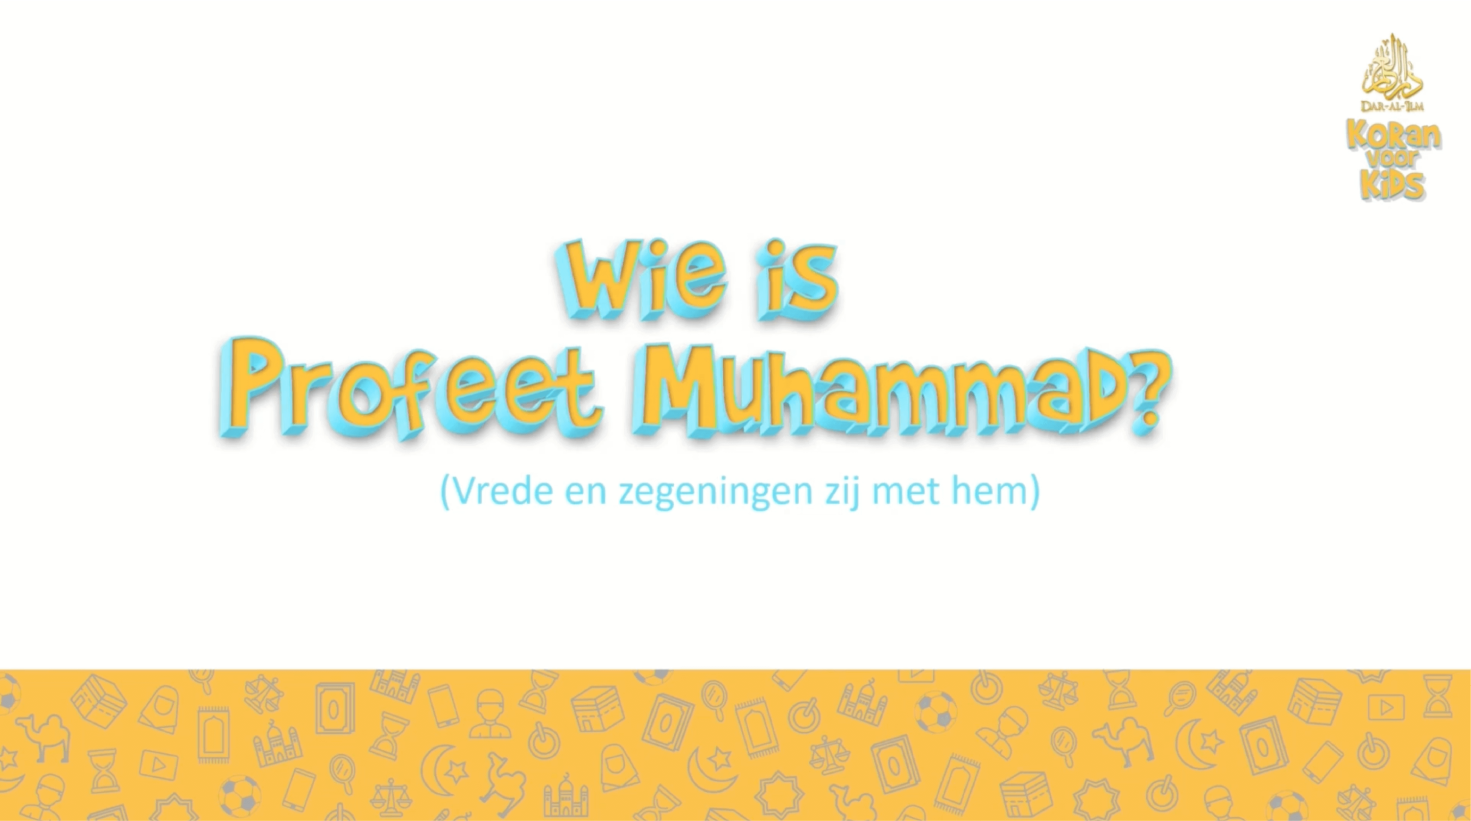 Wie is profeet Muhammad?